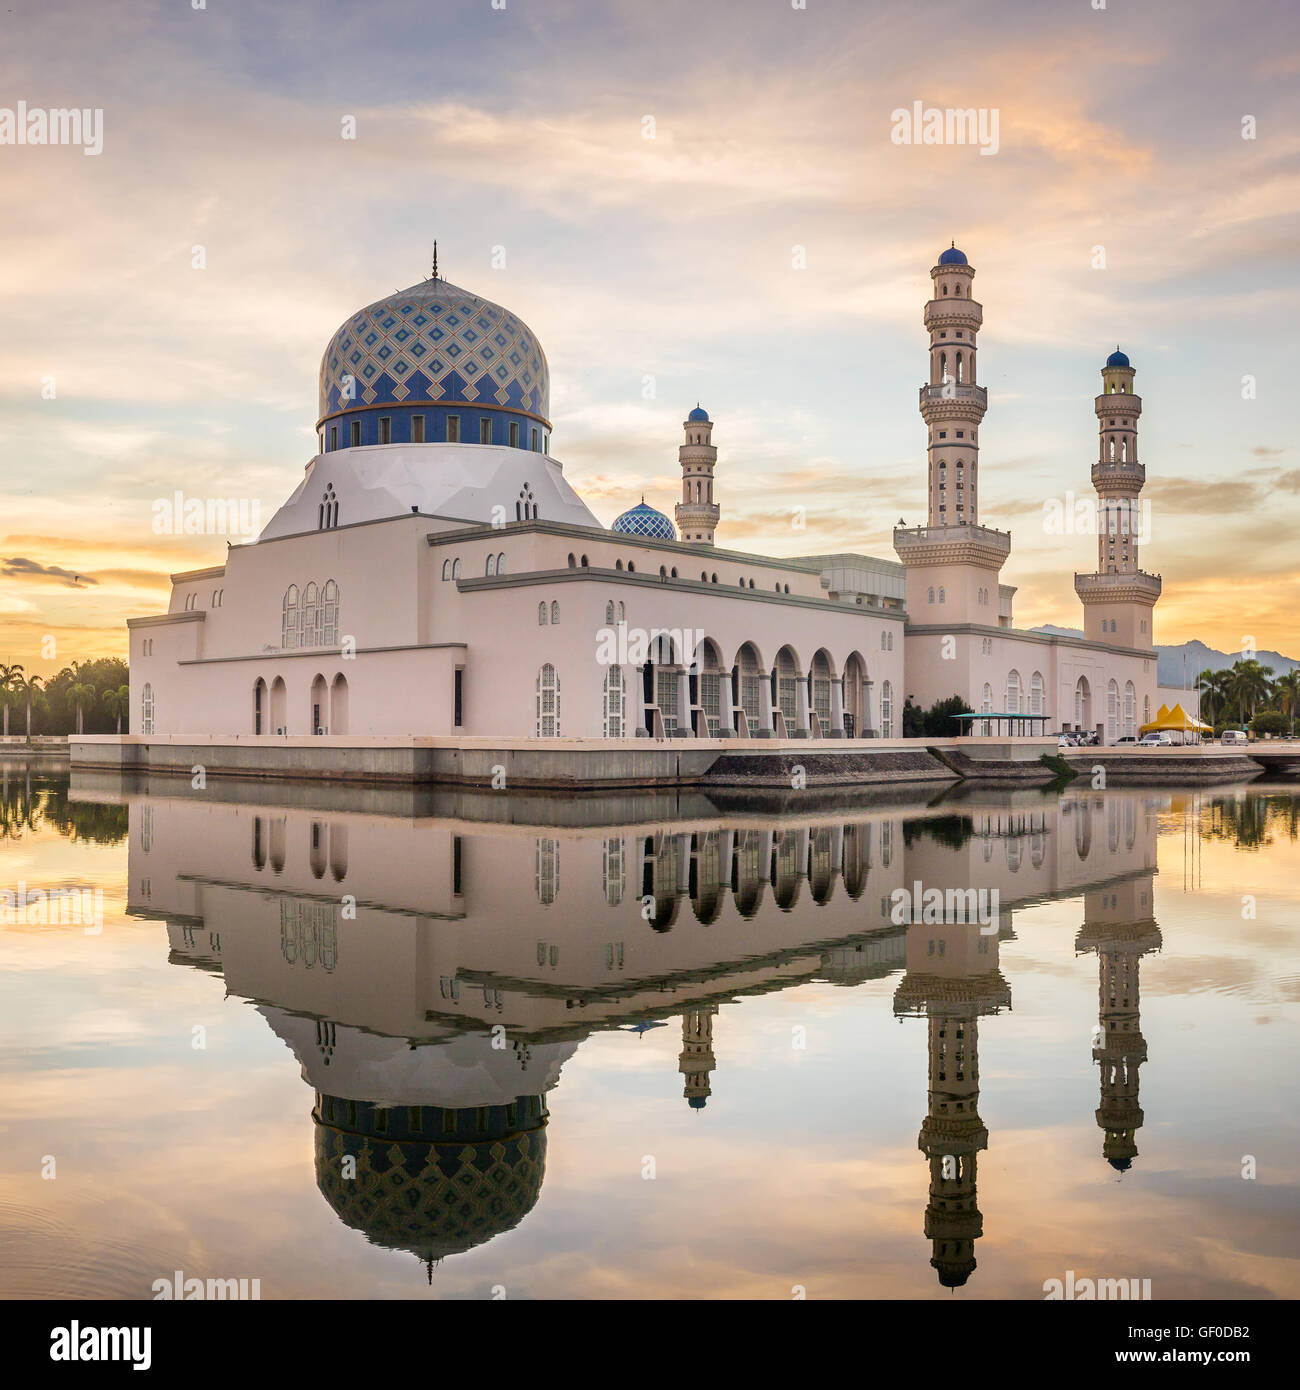 Kota Kinabalu City Mosque (The Floating Mosque) or Masjid Bandaraya Kota Kinabalu Stock Photo